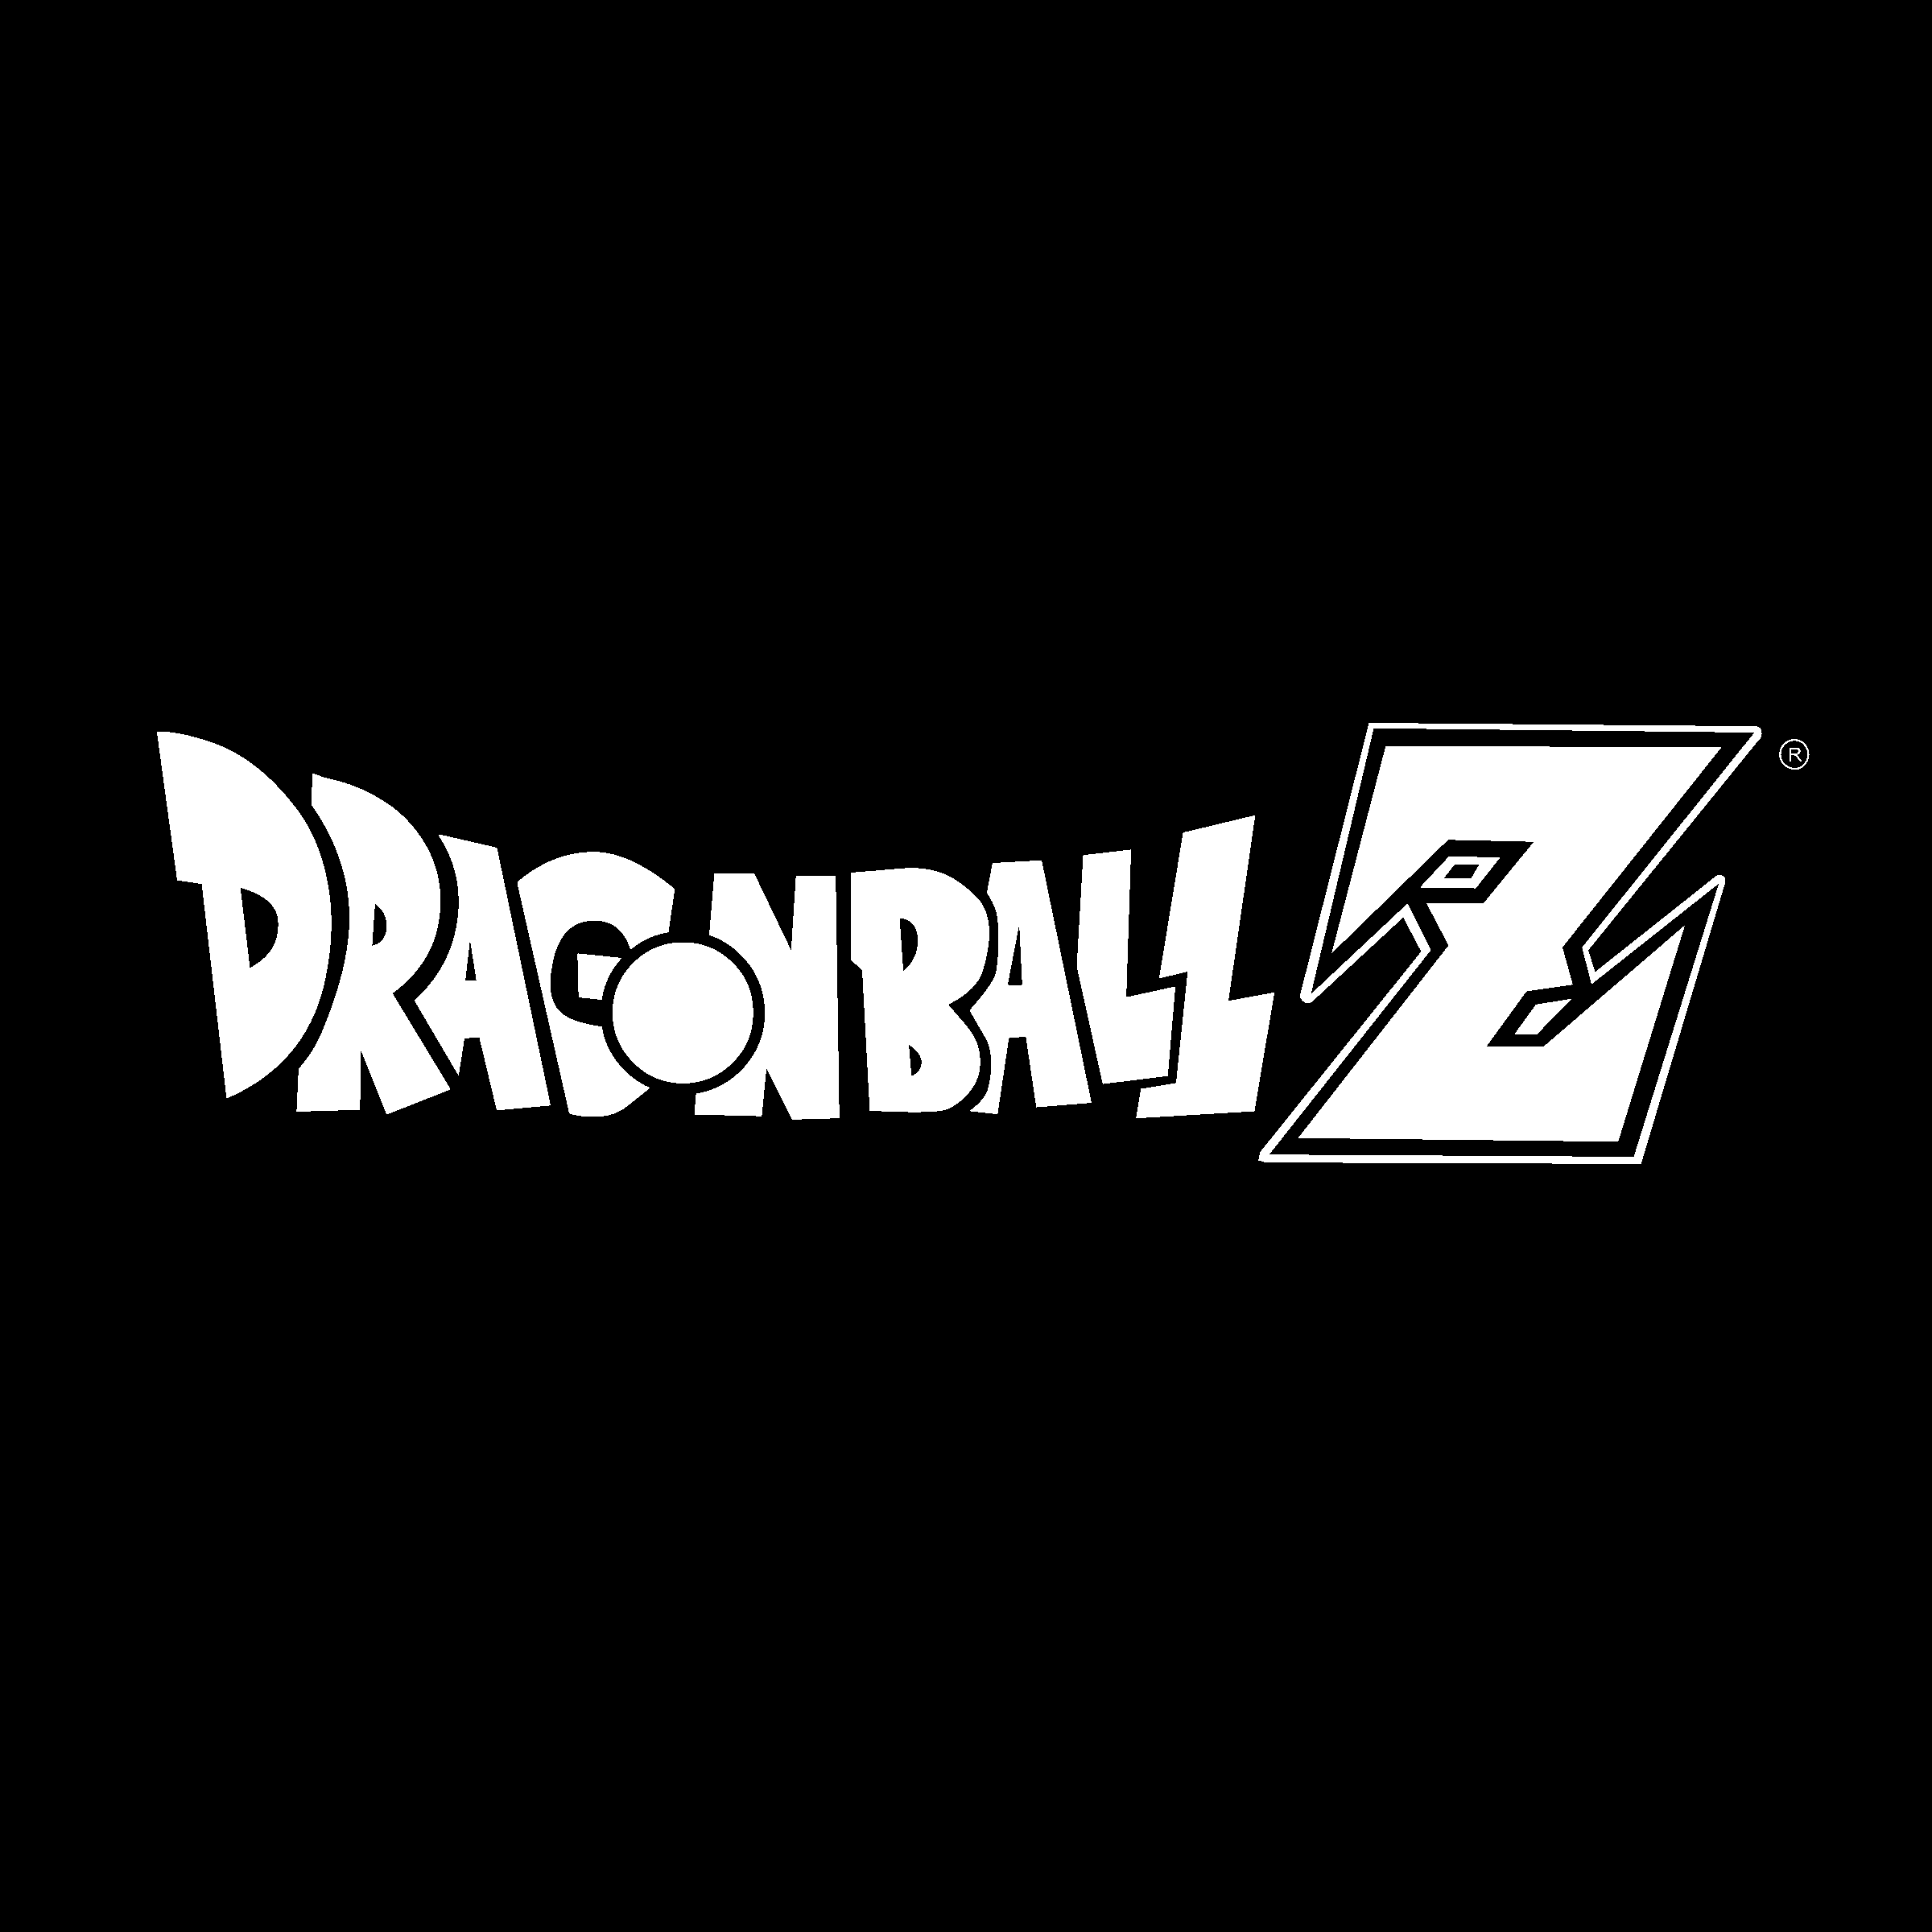 White Z Logo - Dragon Ball Z Logo PNG Transparent & SVG Vector - Freebie Supply